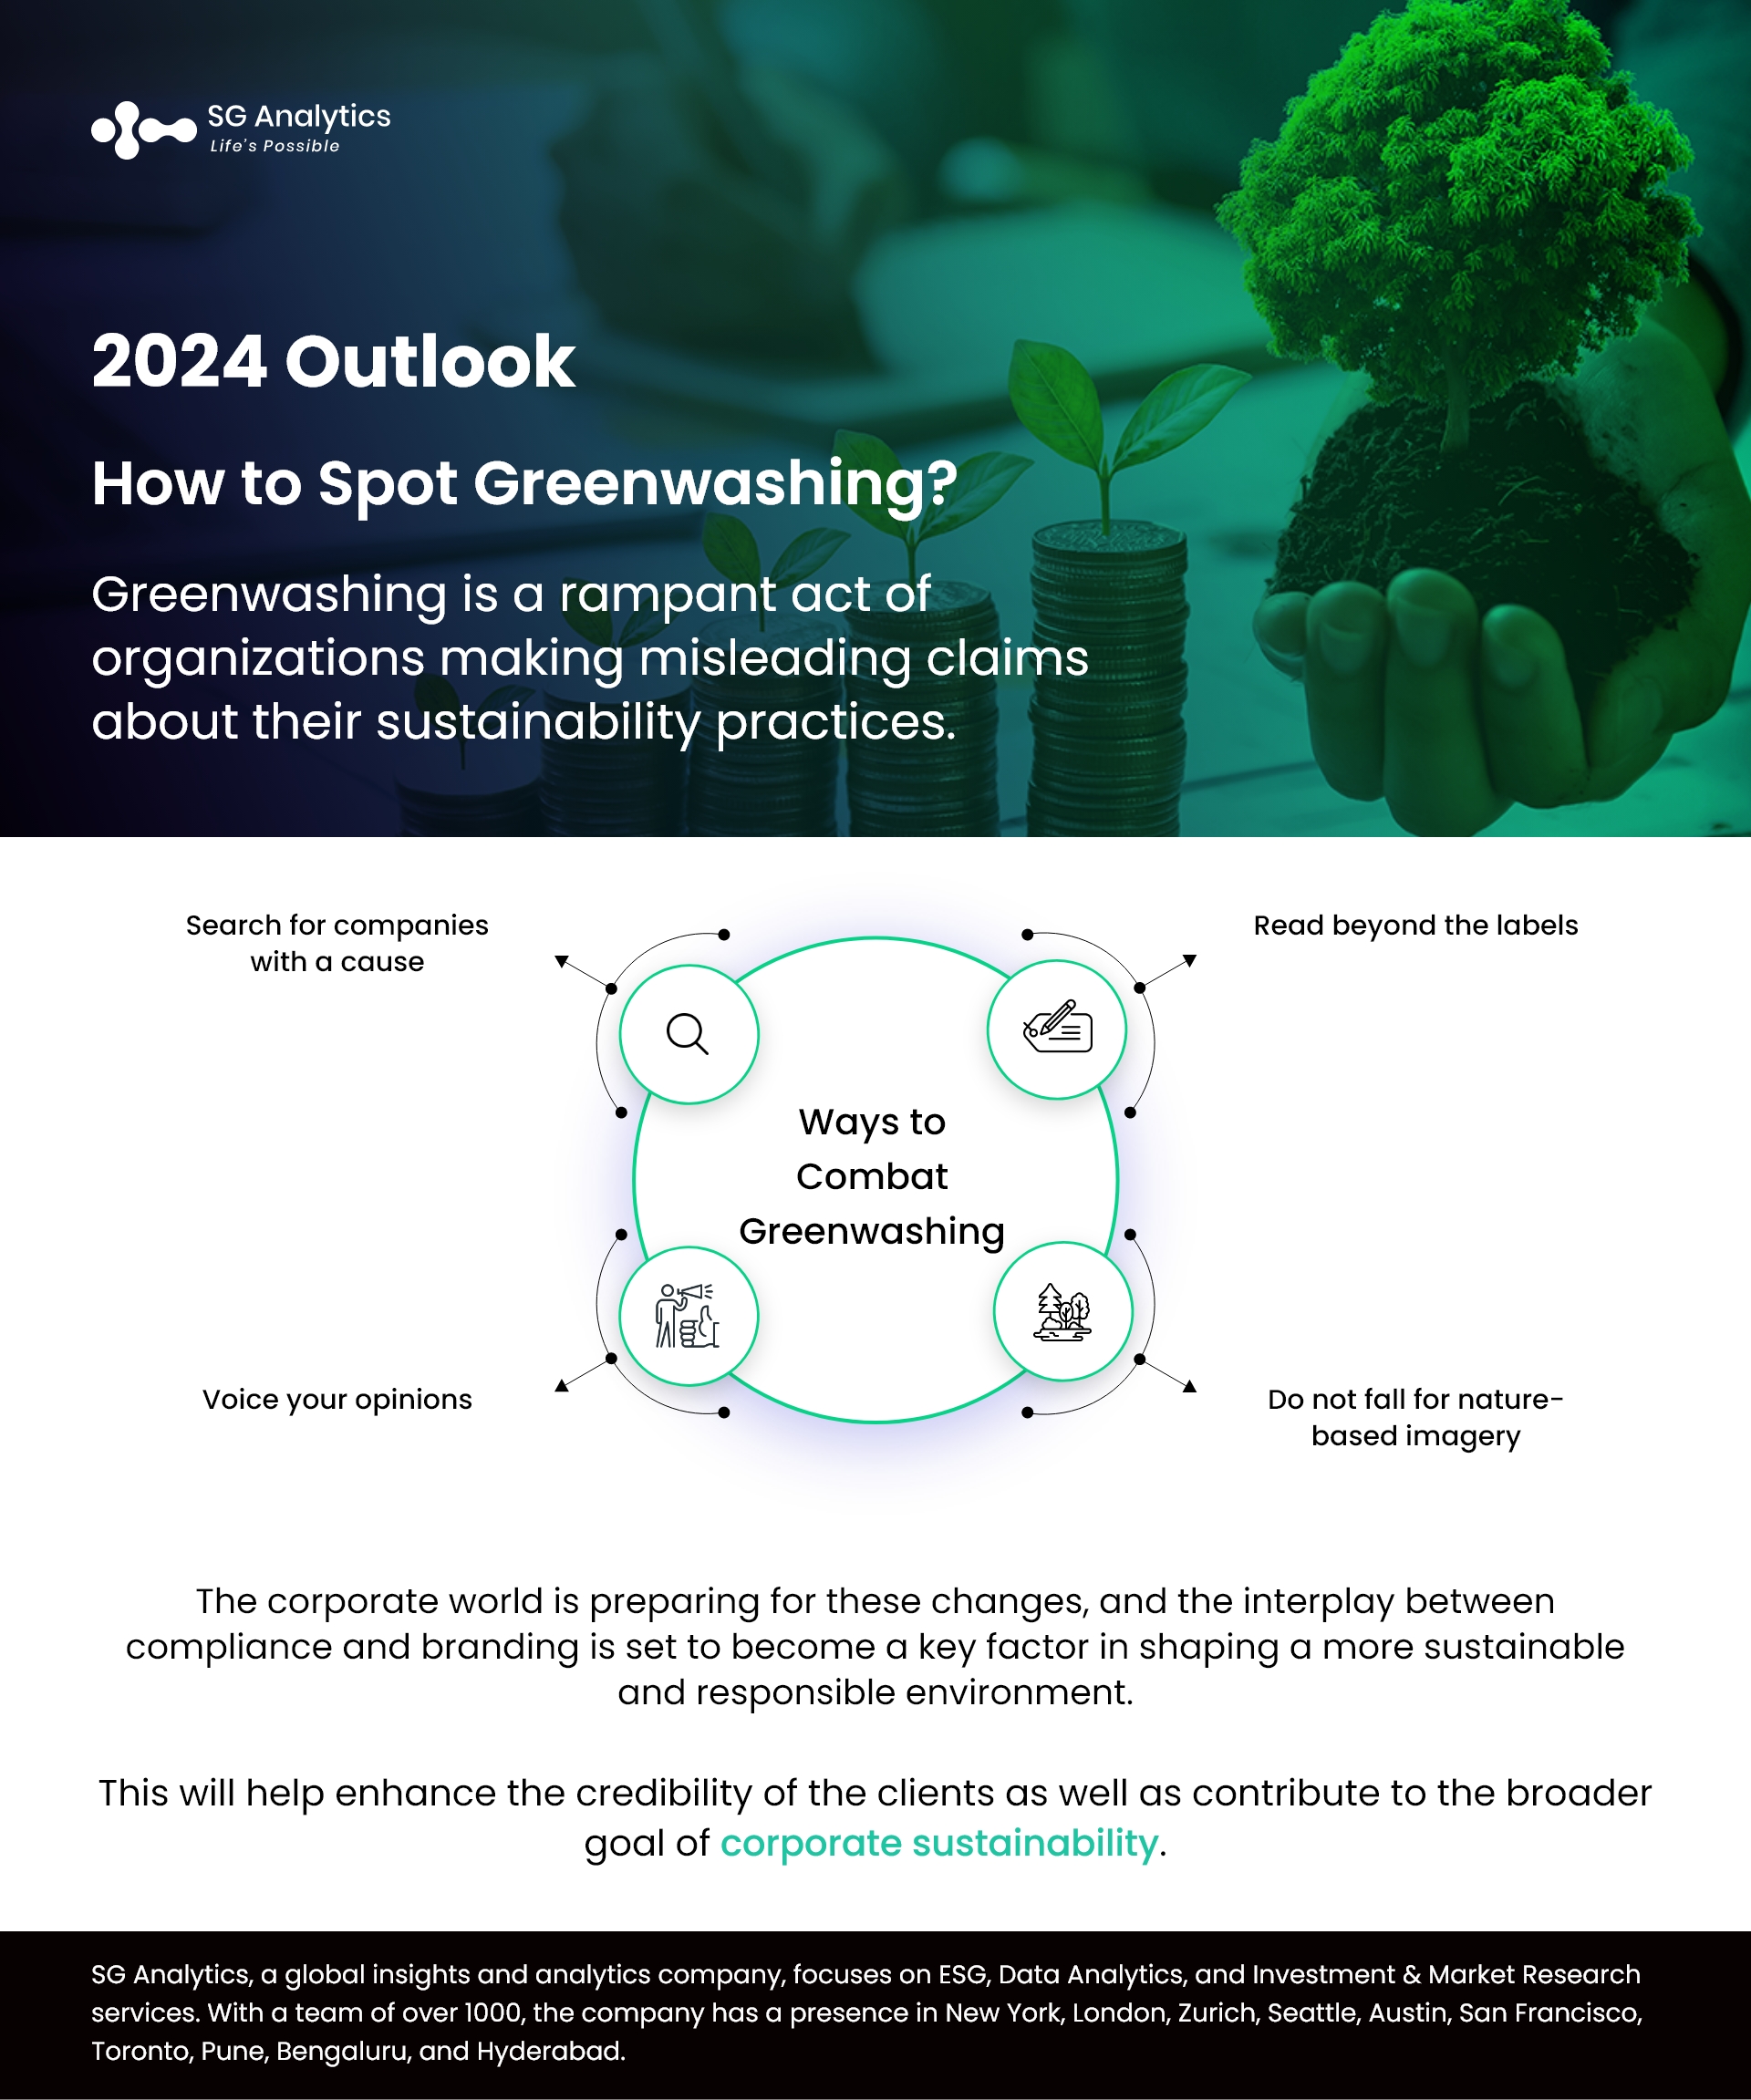 How to Spot Greenwashing